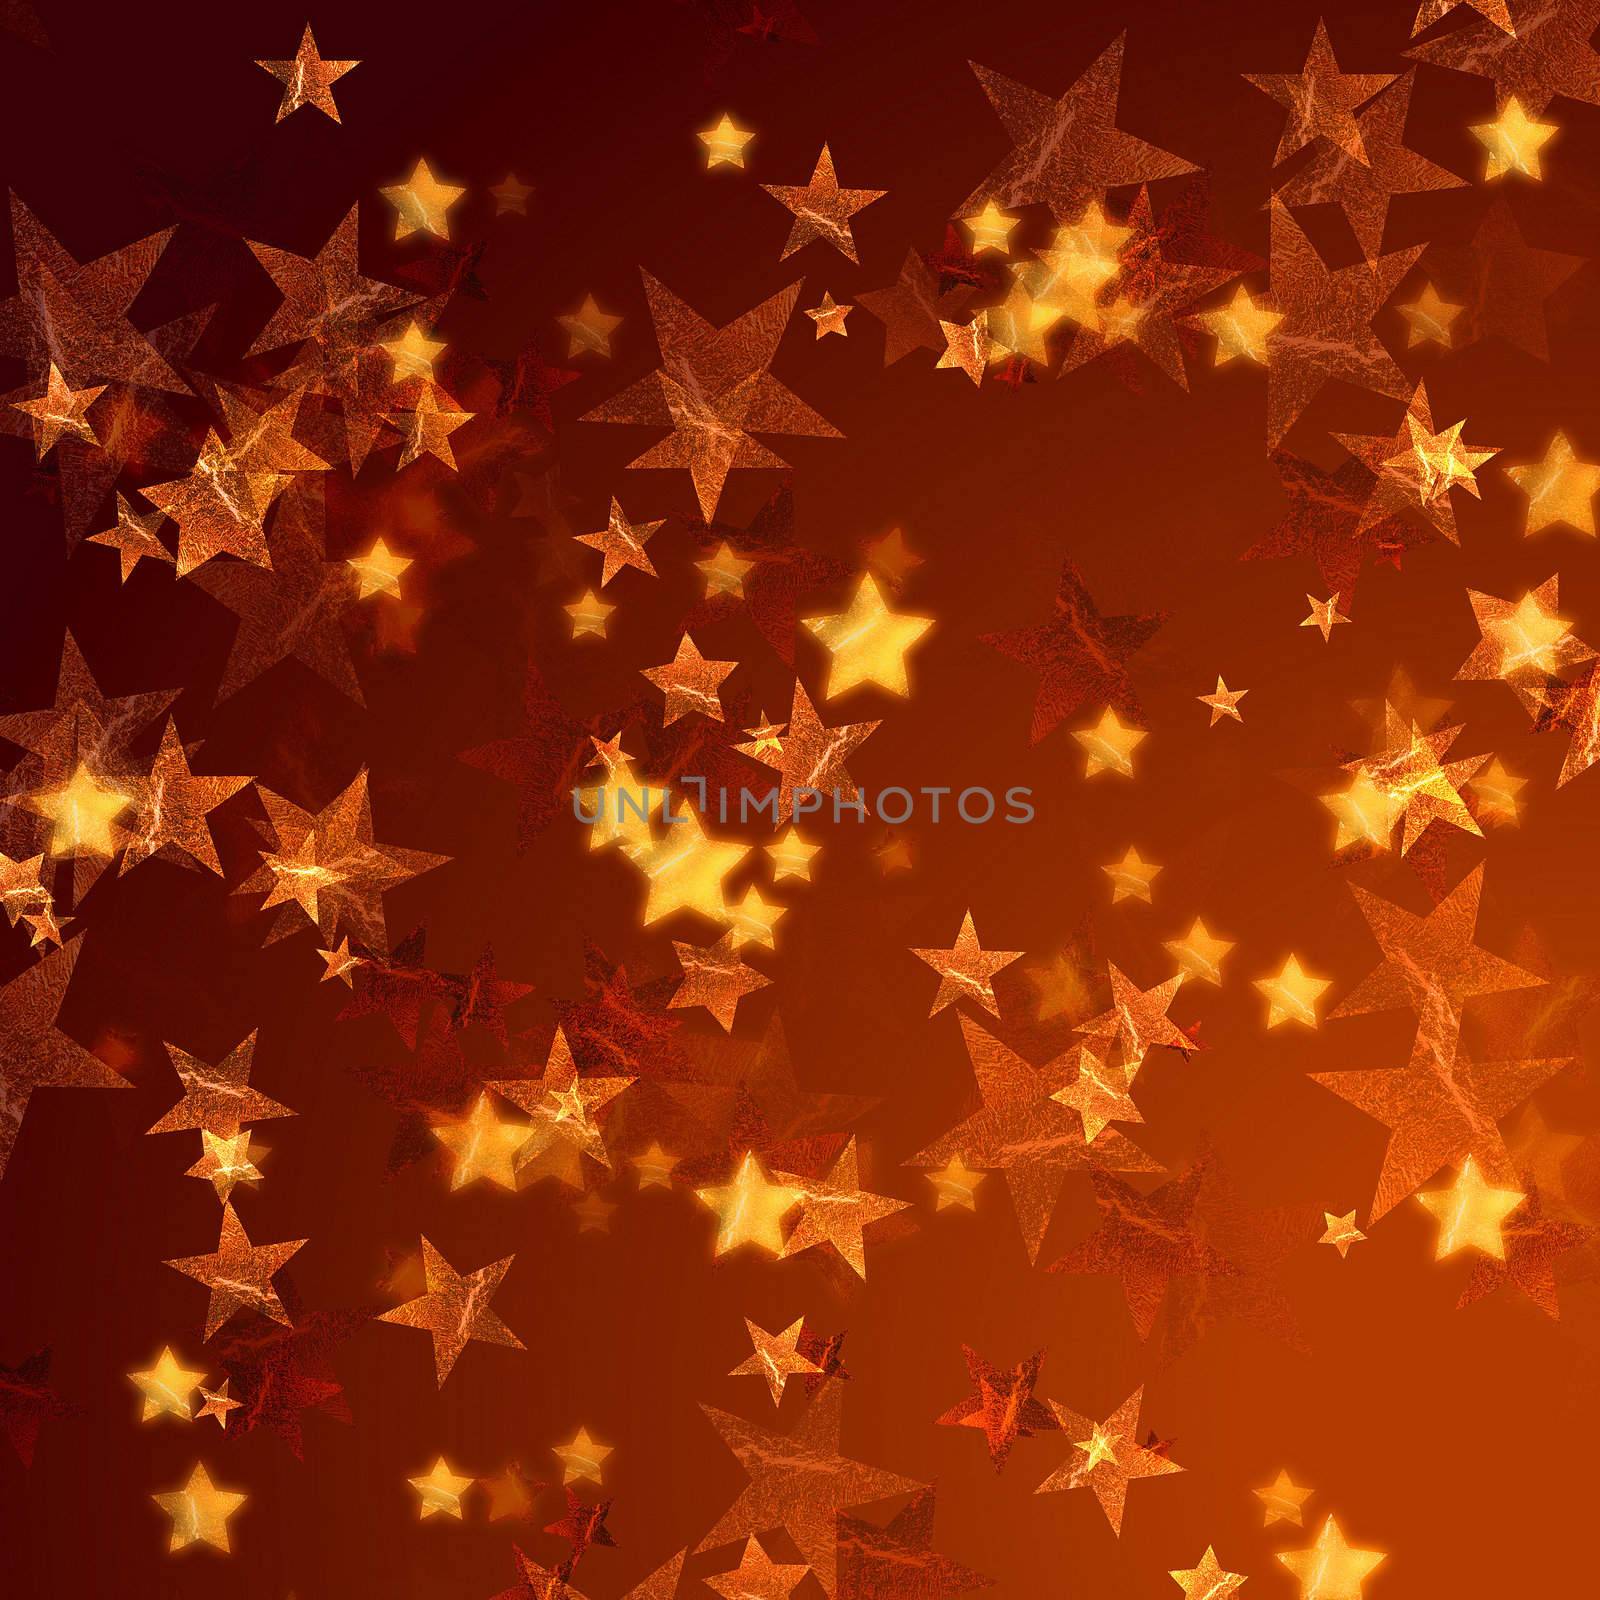 golden stars background by marinini